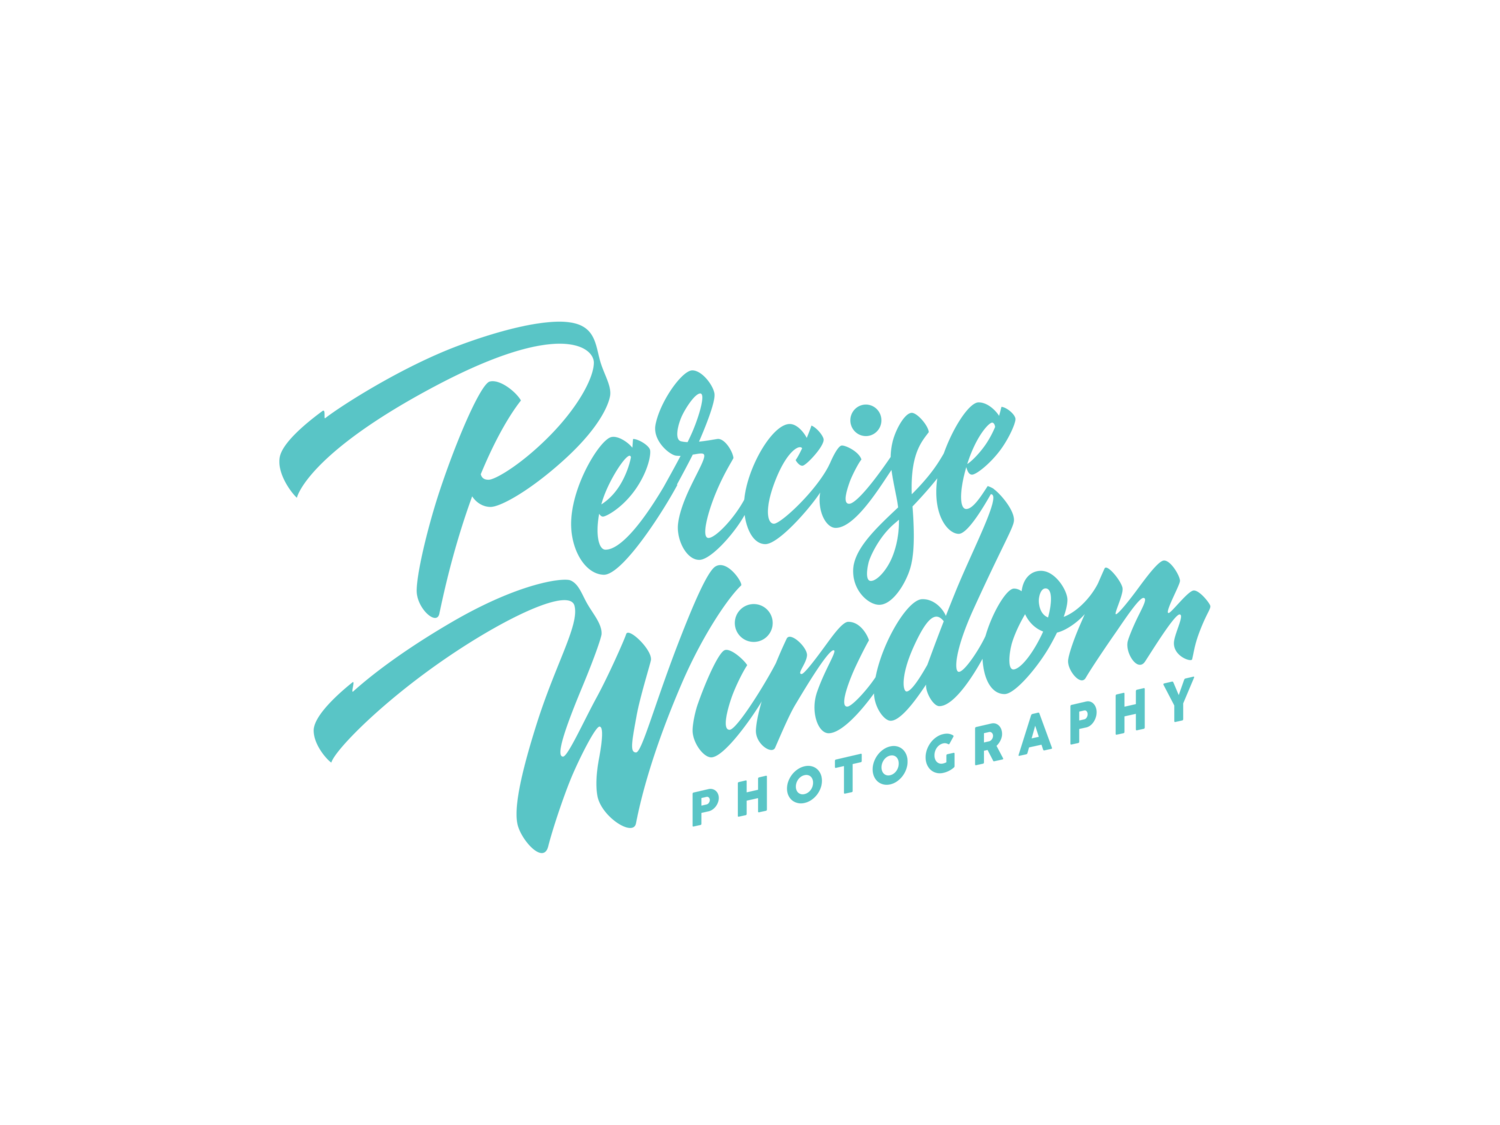 Percise Windom Photography